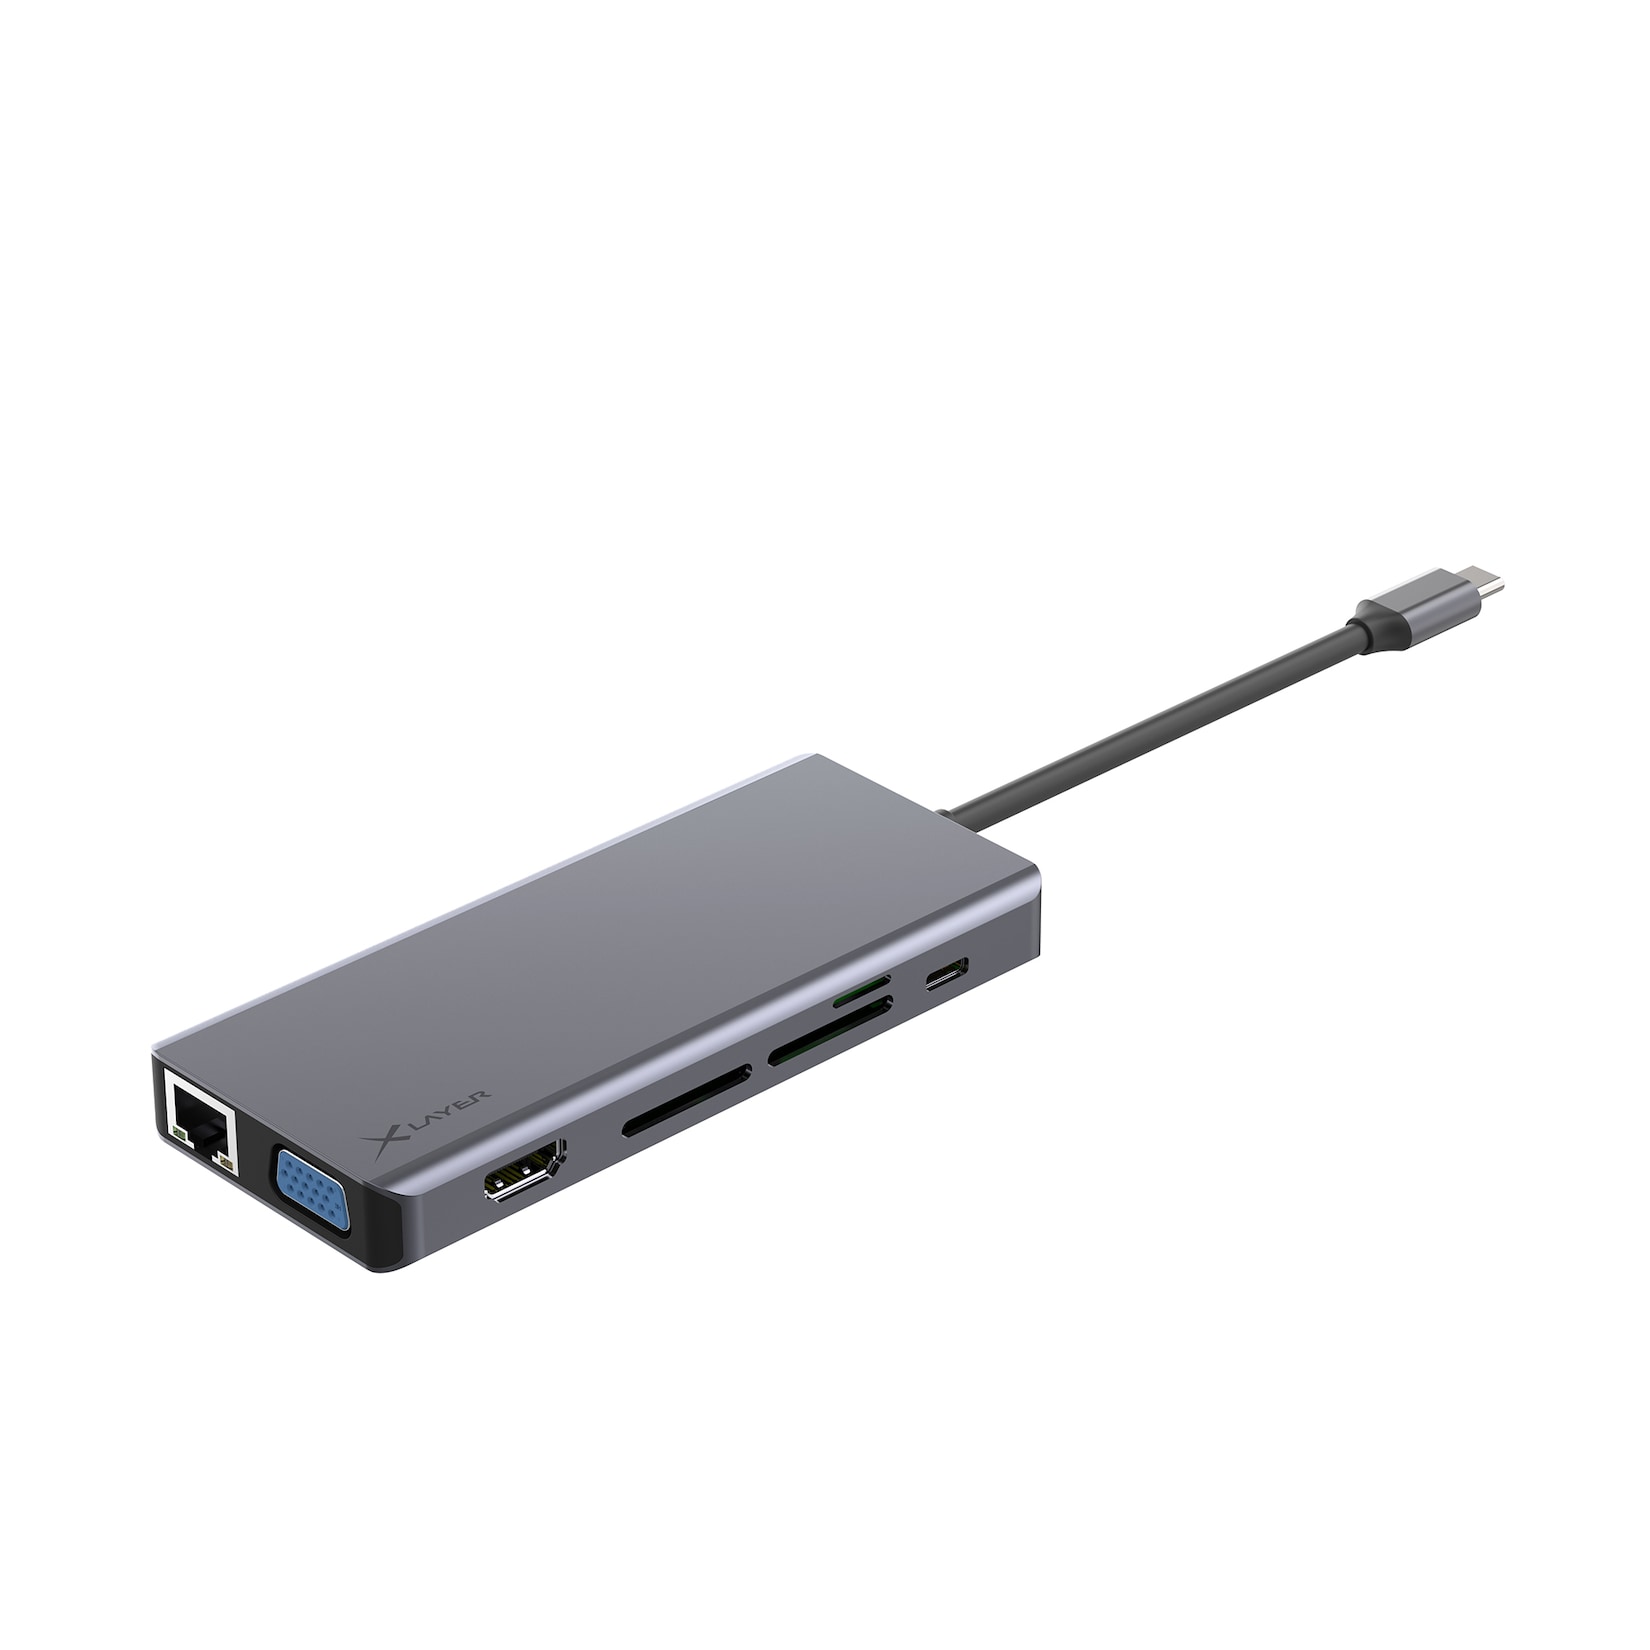 Xlayer USBDEVICE USB 3.0 HUB XLayer Typ C 13-IN-1 Grey